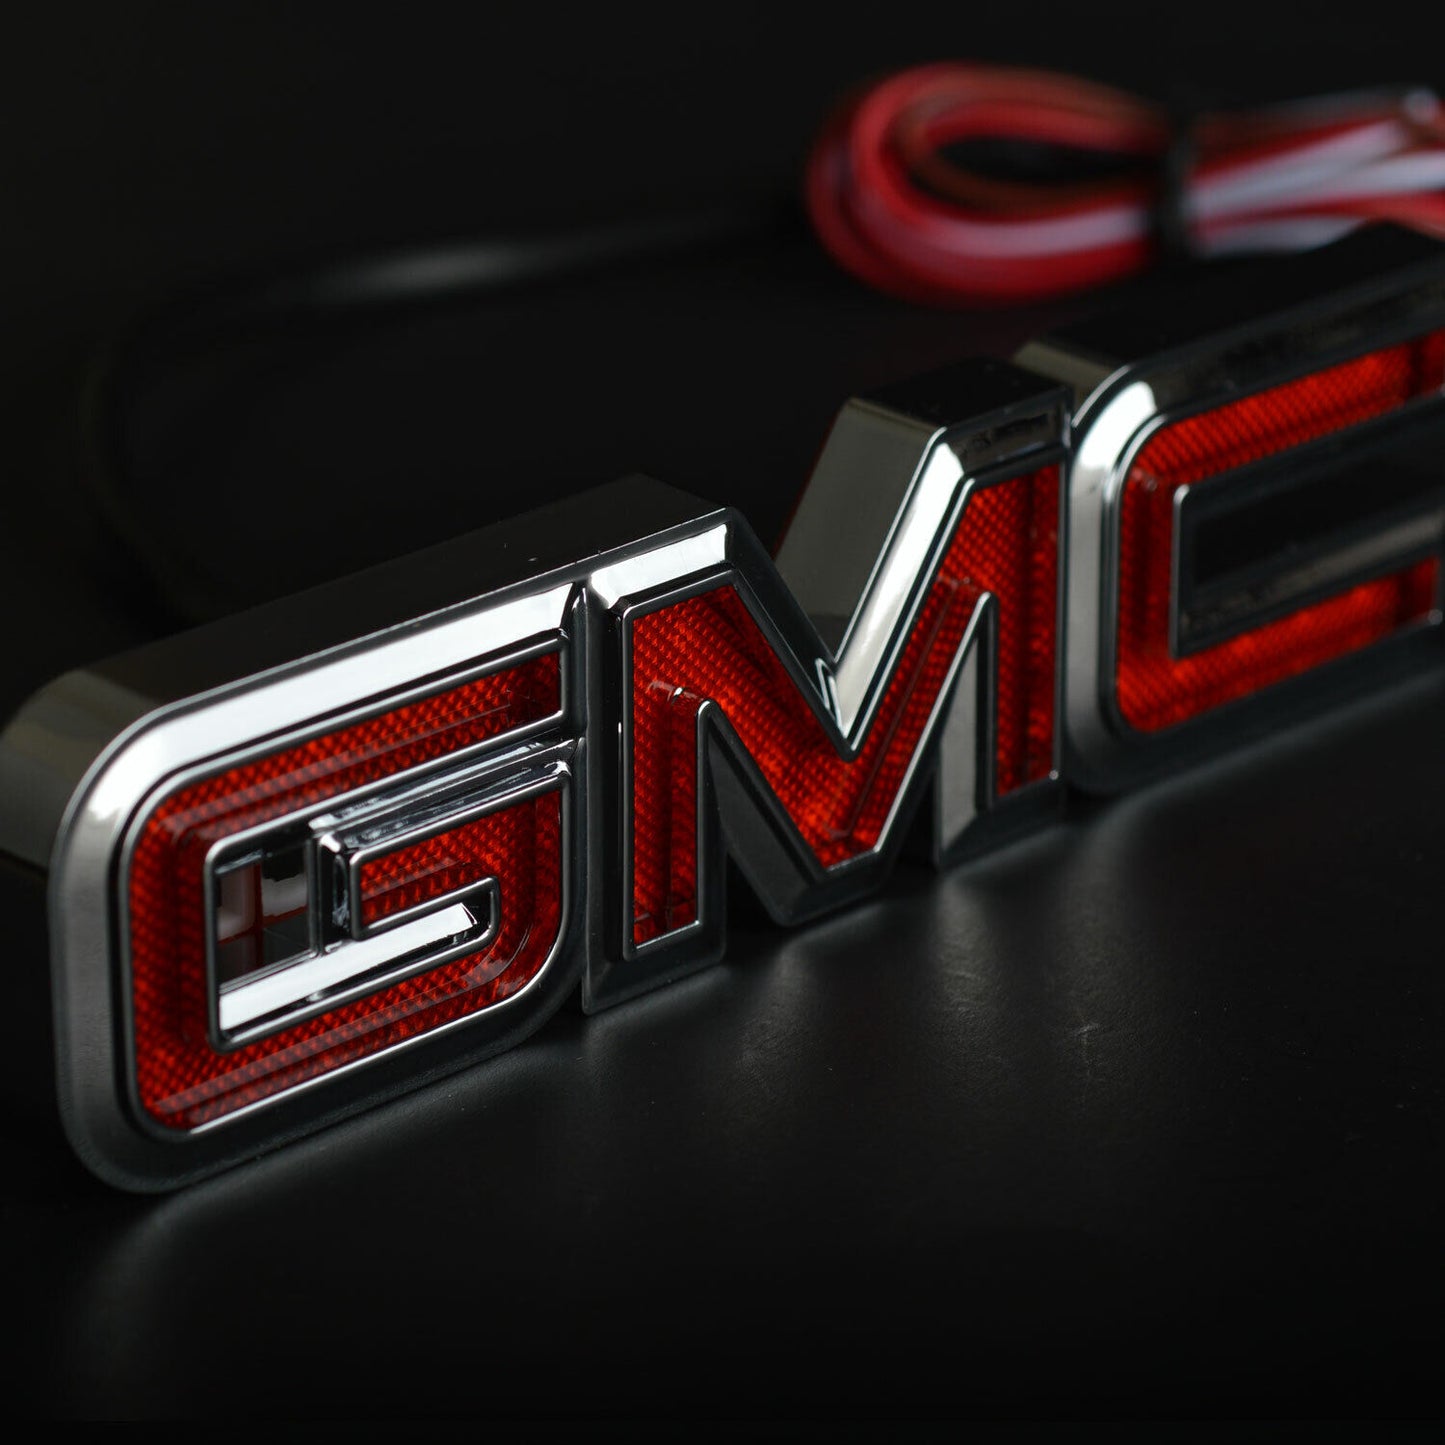 Bosswell Official Licensed LED Light up GMC Tailgate Emblem for Trucks 7″ wide